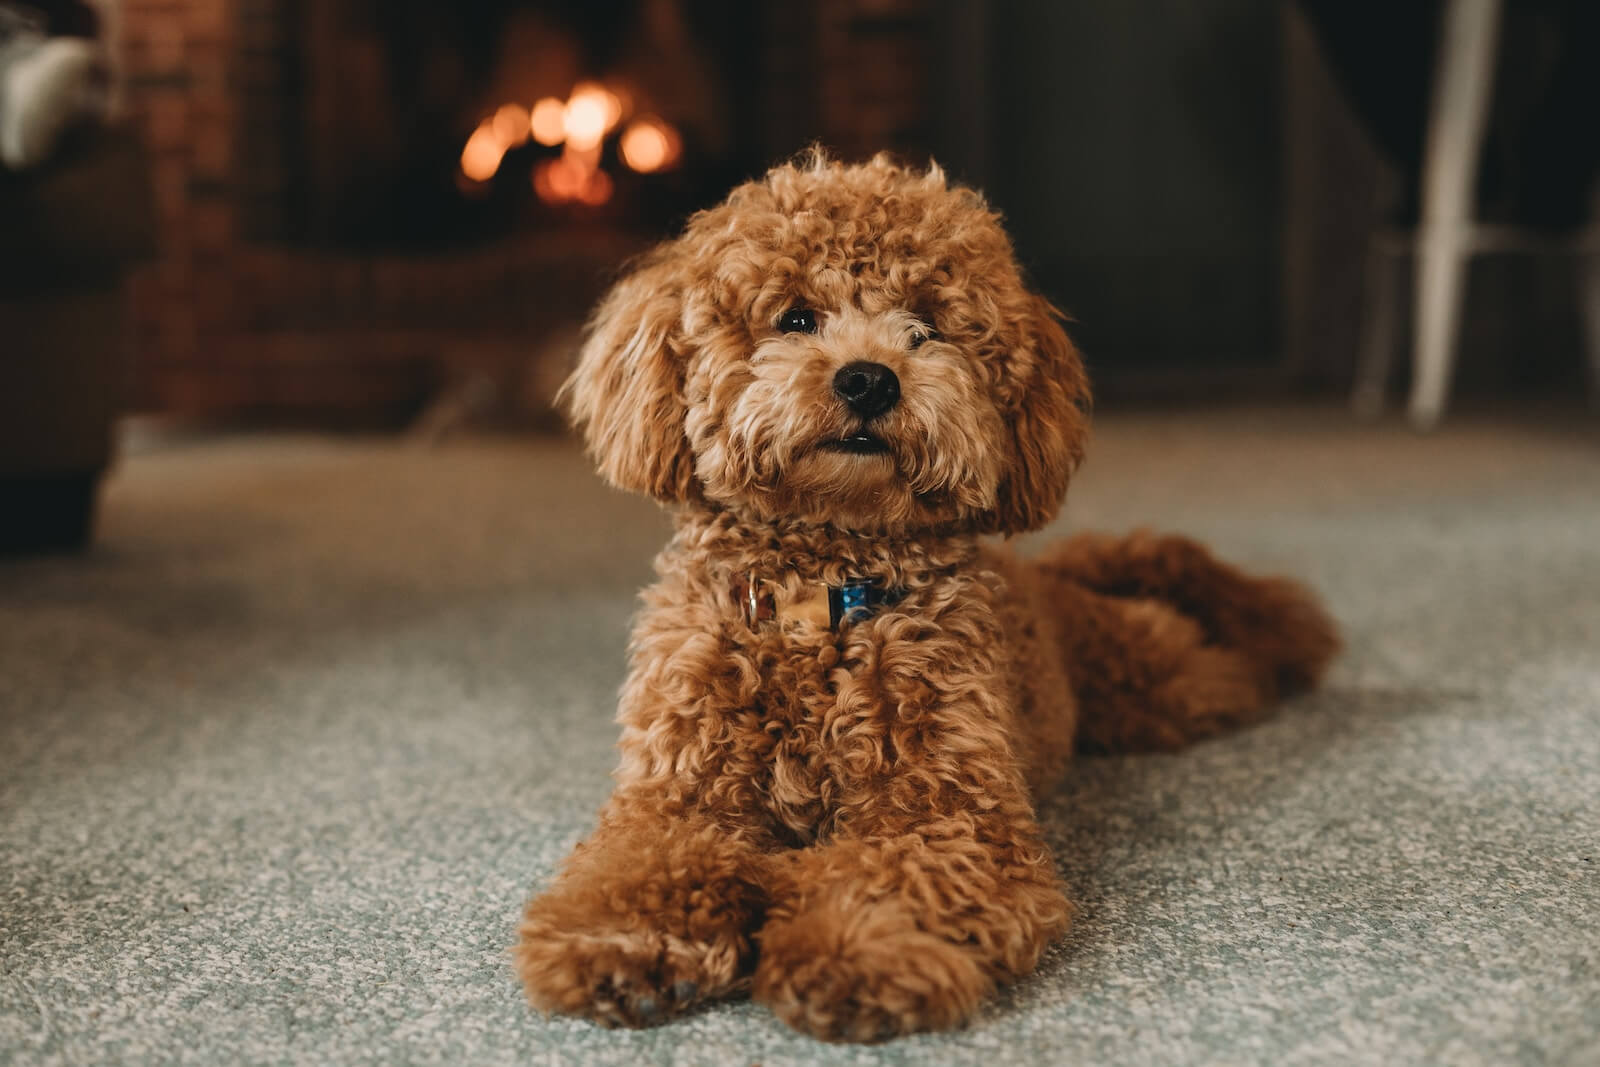 A poodle by a fire